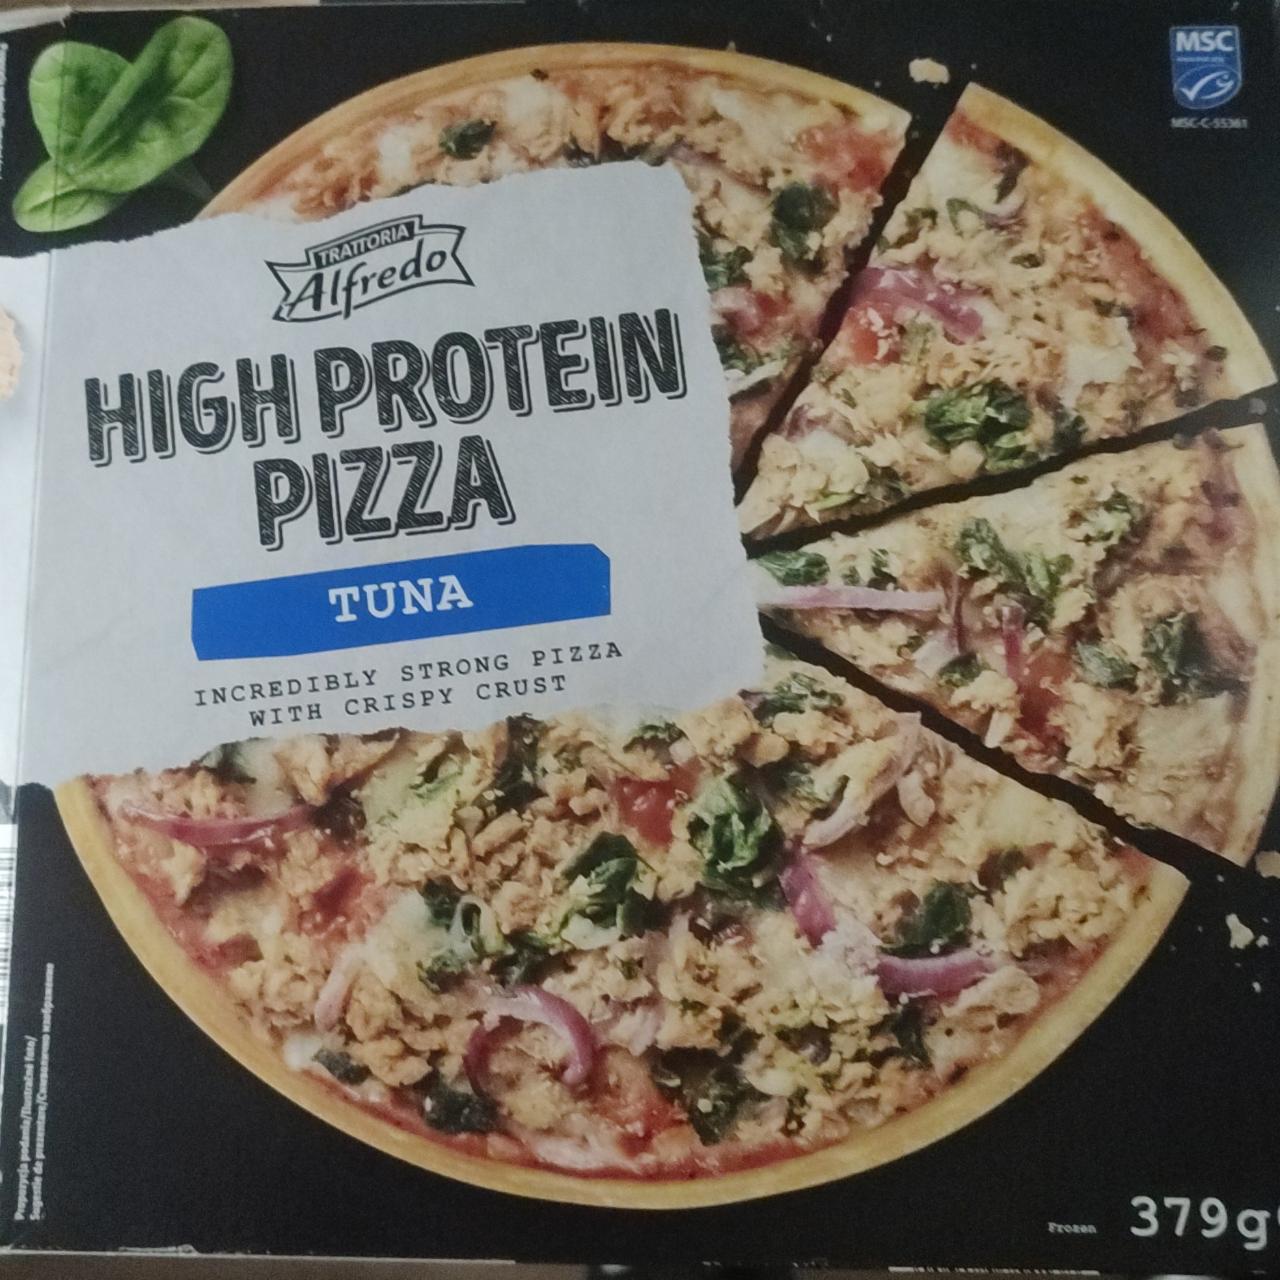 Zdjęcia - High Protein Pizza Tuna Trattoria Alfredo